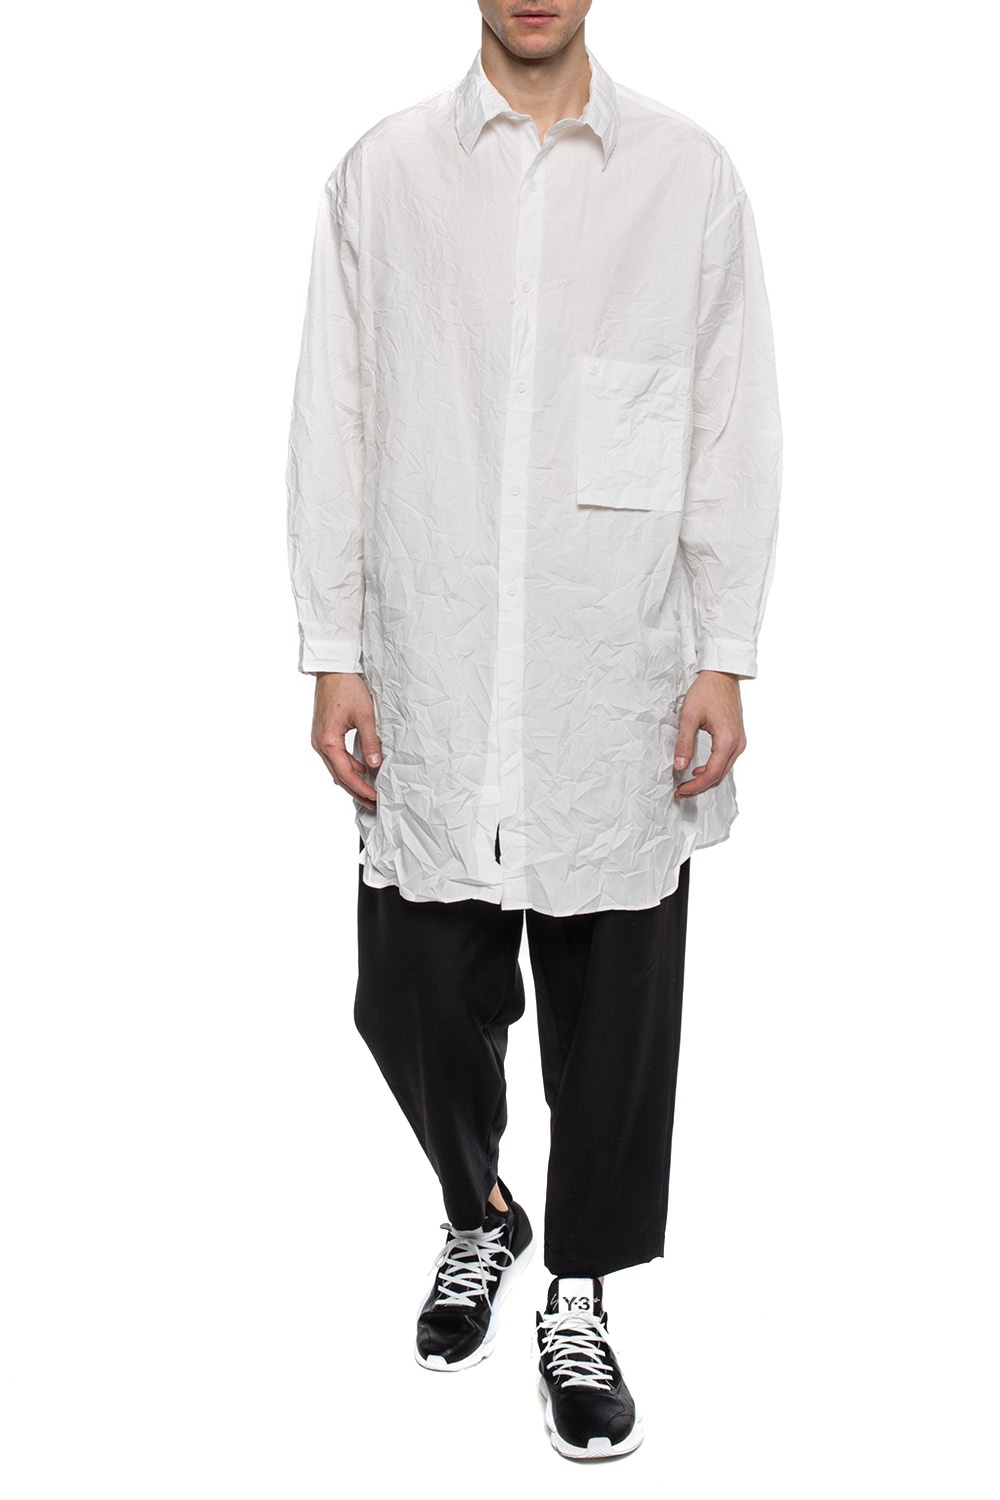 Yohji Yamamoto Long shirt with a special texture | Men's Clothing 